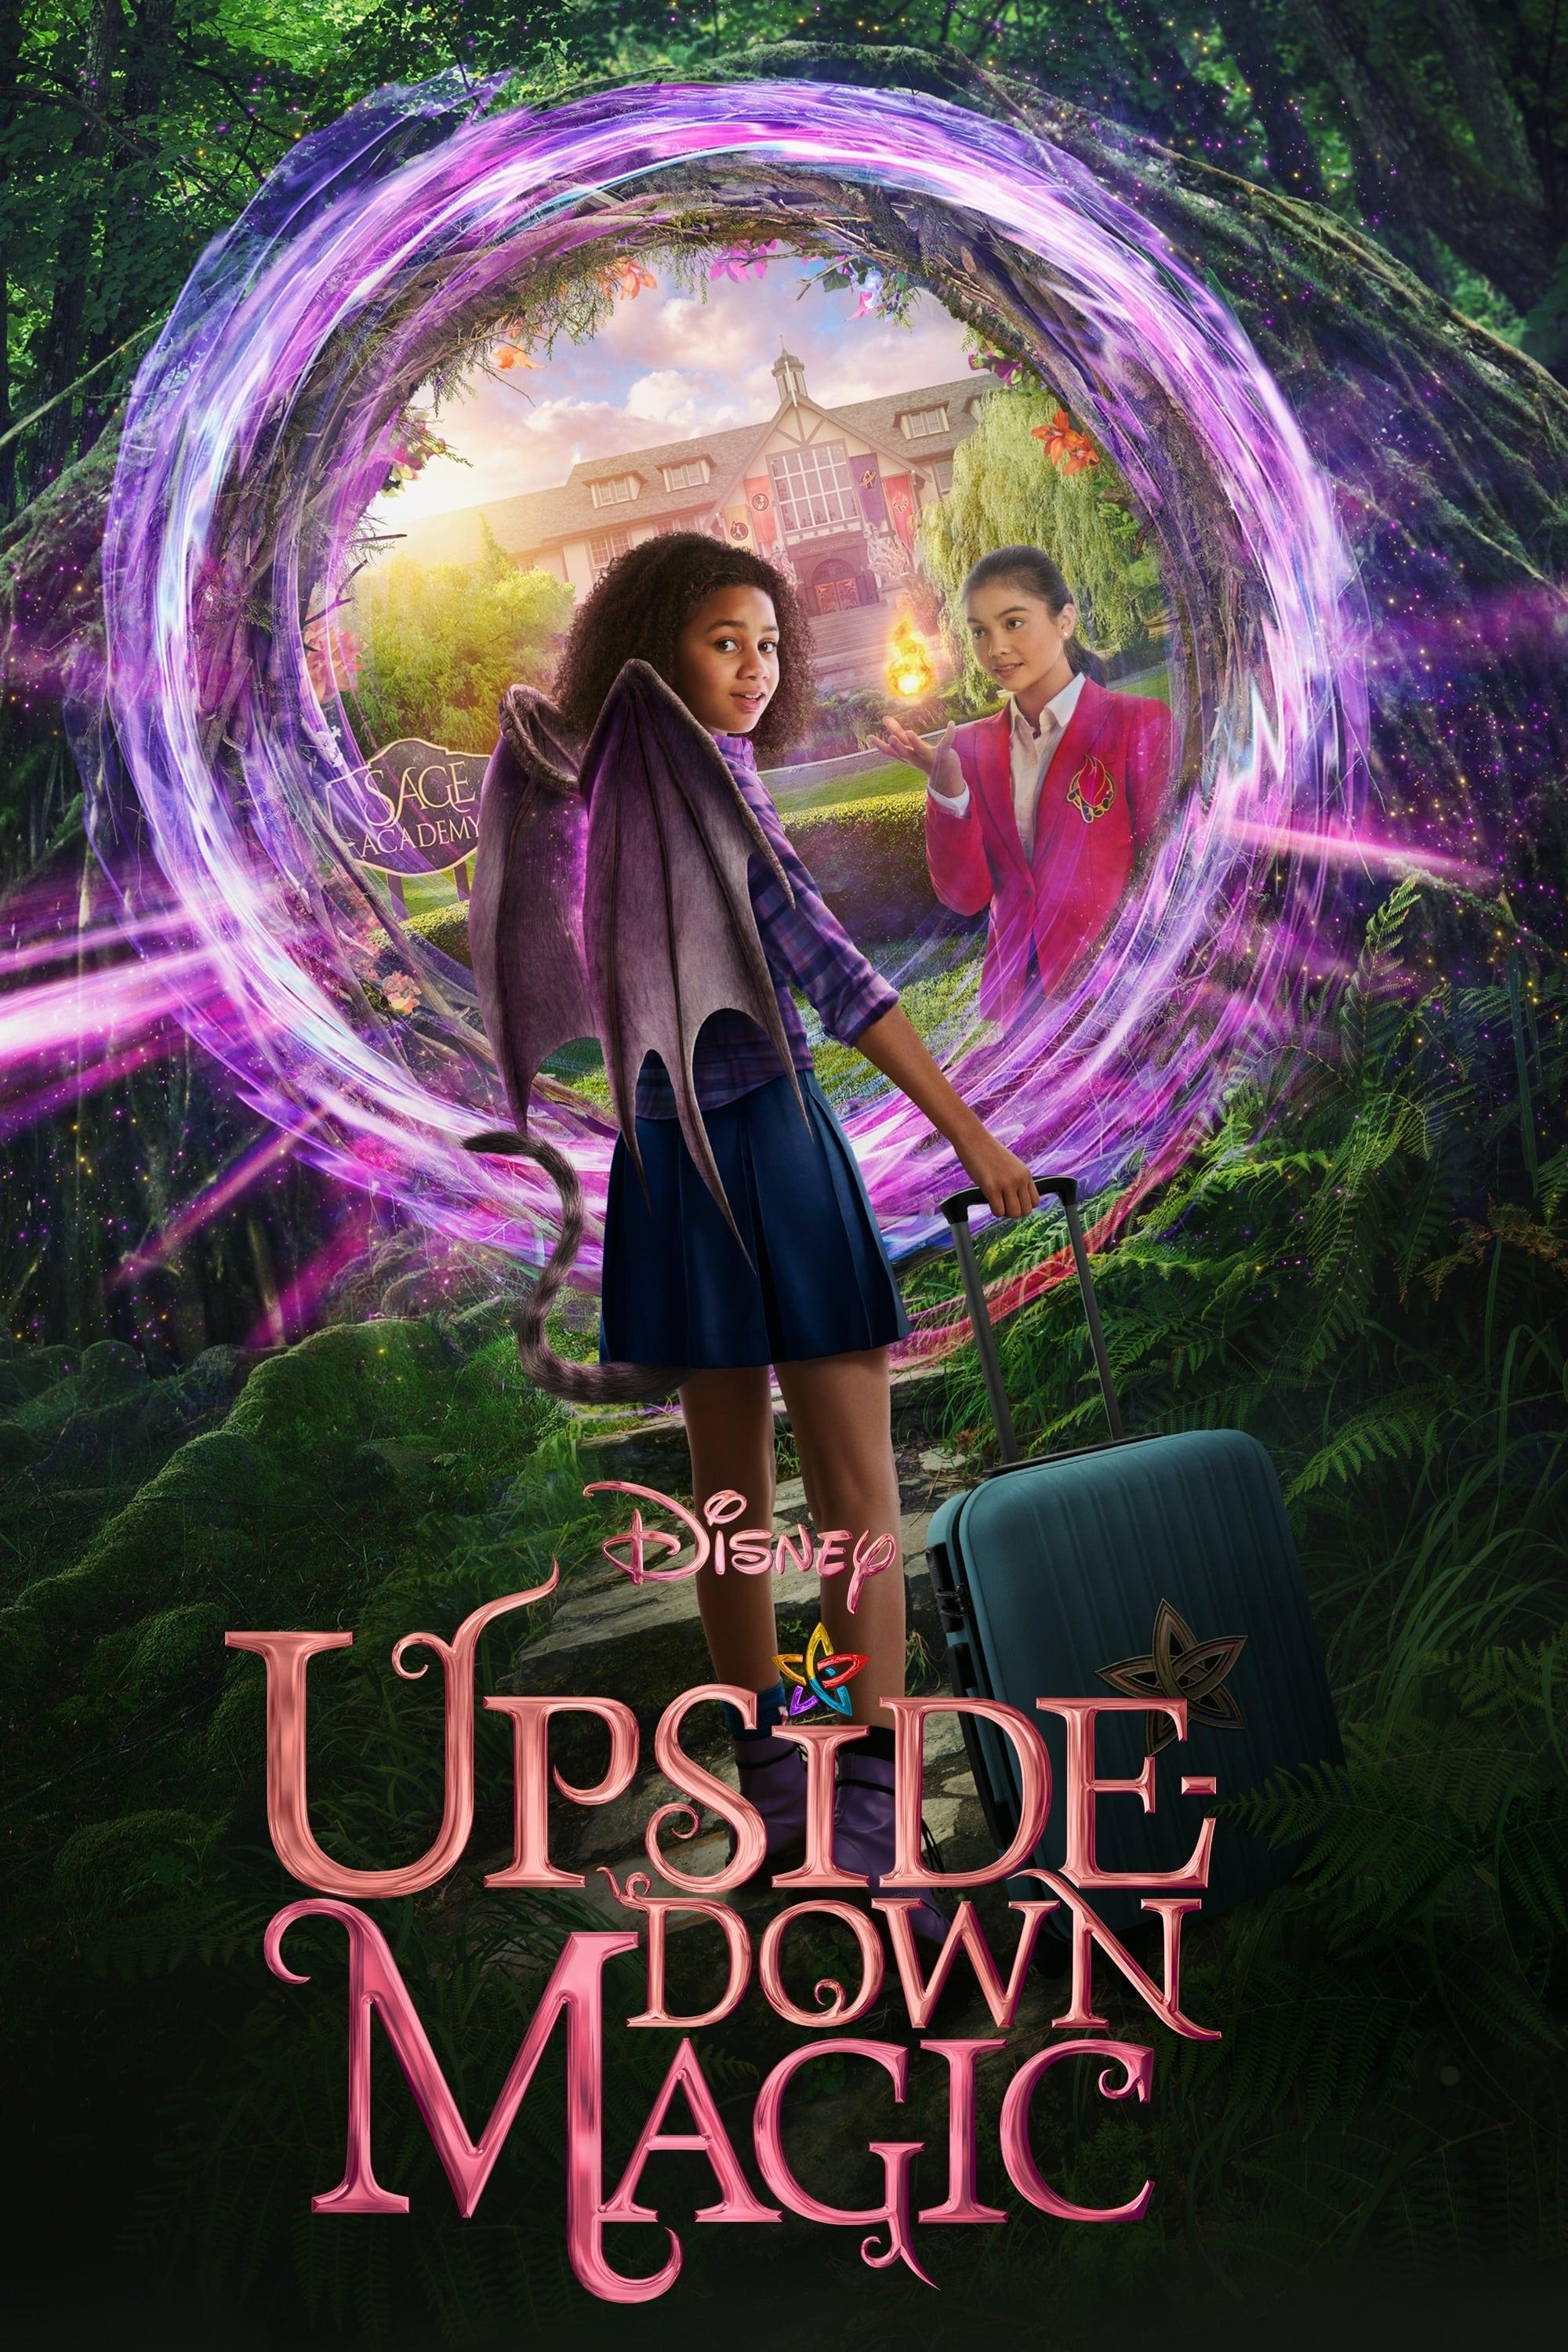 Upside-Down Magic poster